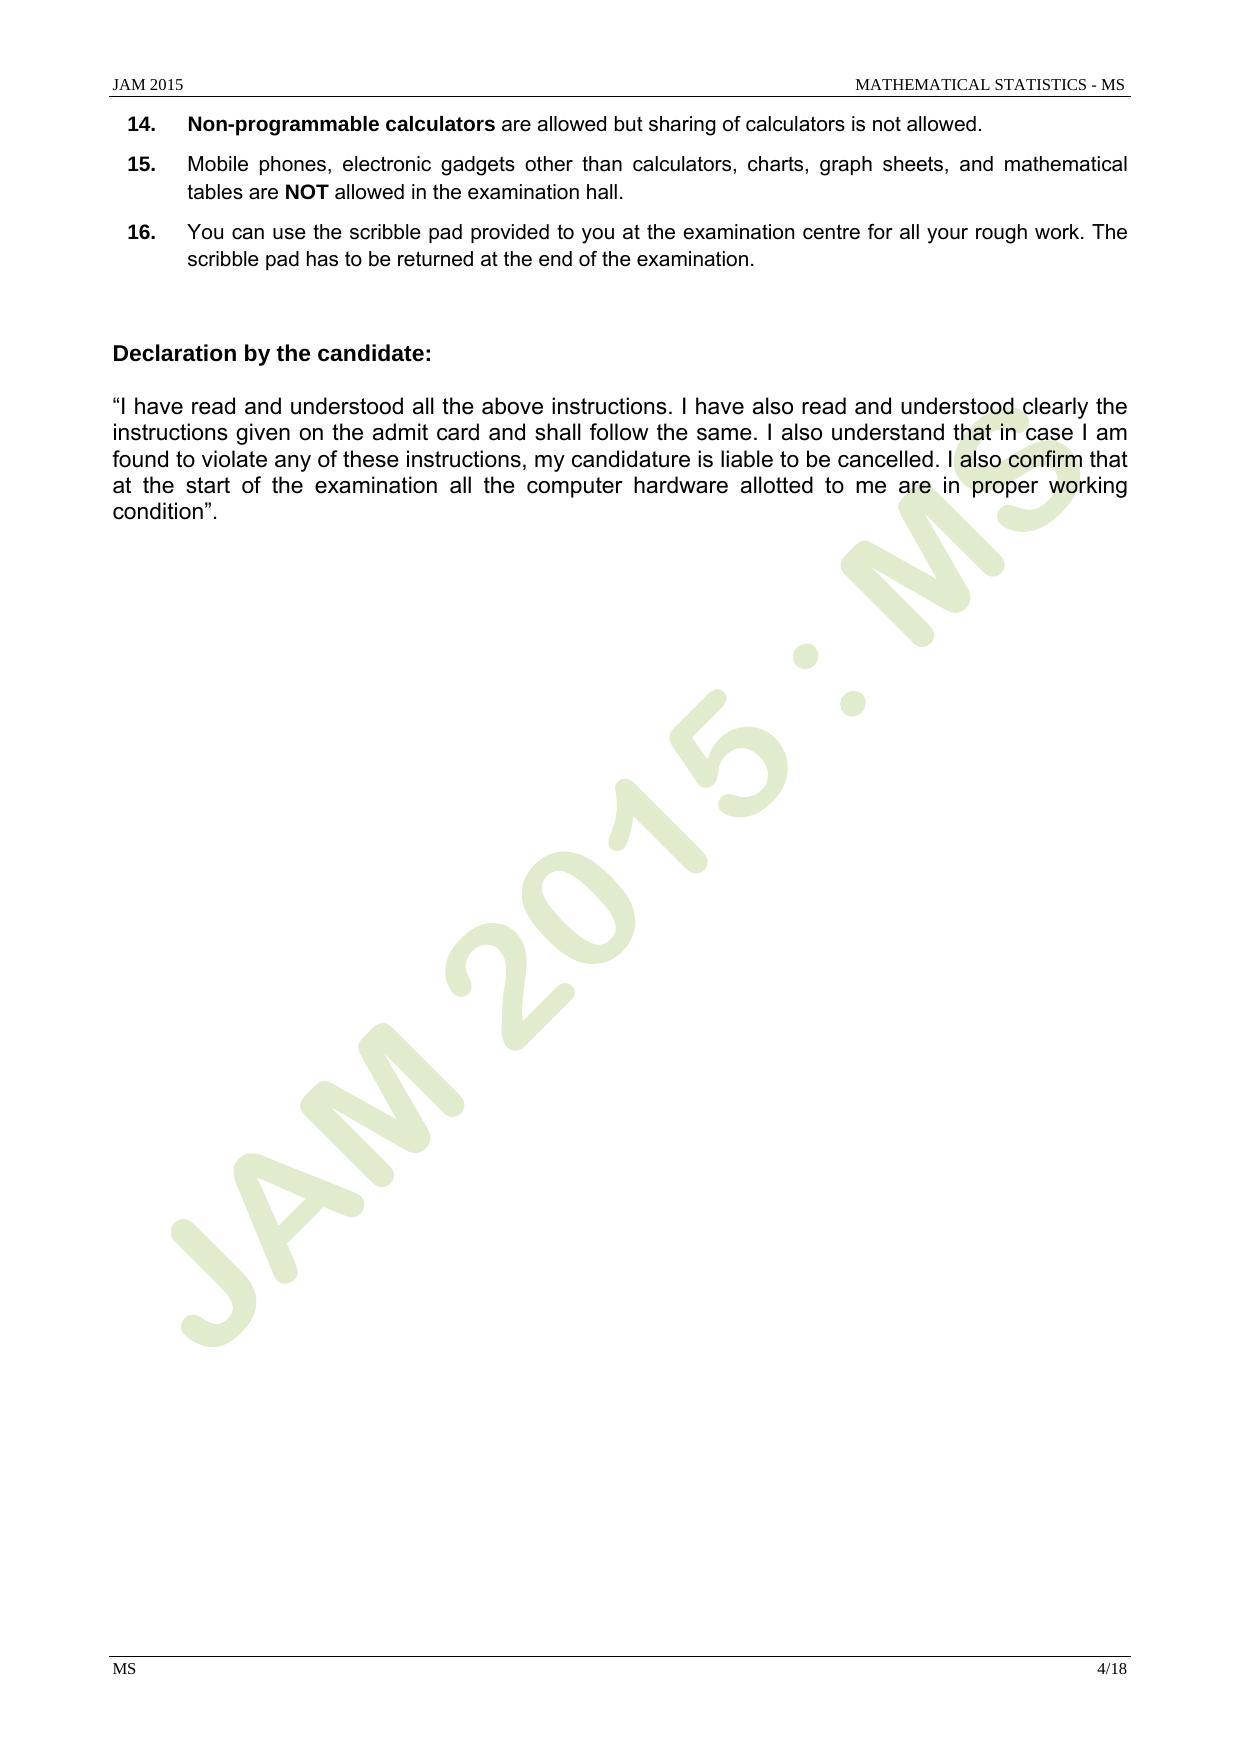 JAM 2015: MS Question Paper - Page 4